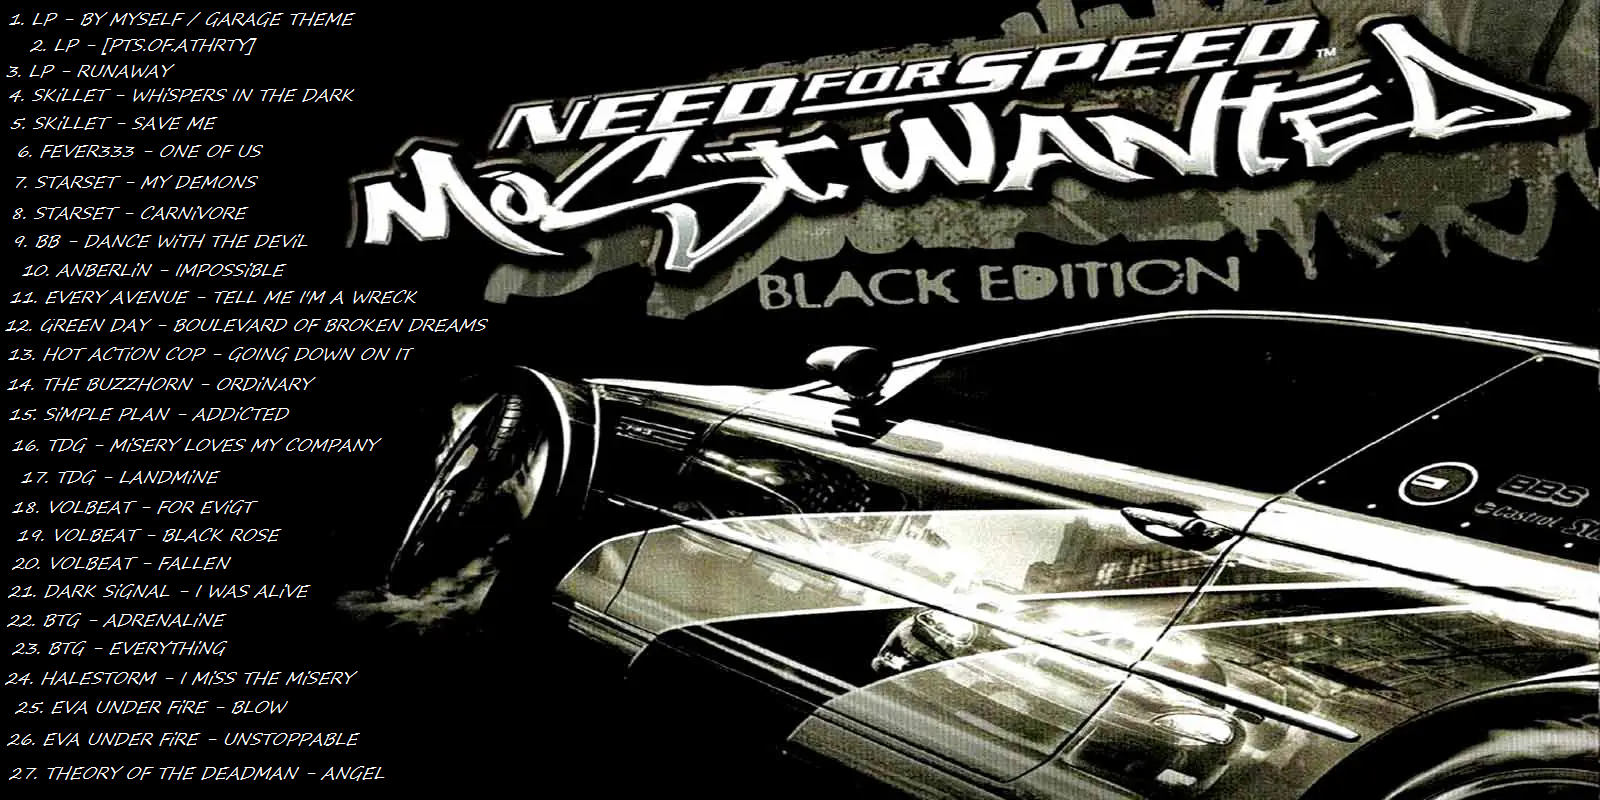 Саундтреки нфс мост вантед. NFS most wanted 2005 диск. Диск нид фор СПИД мост вантед 2005. Постер нфс мост вантед 2005. Need for Speed most wanted Black Edition диск.